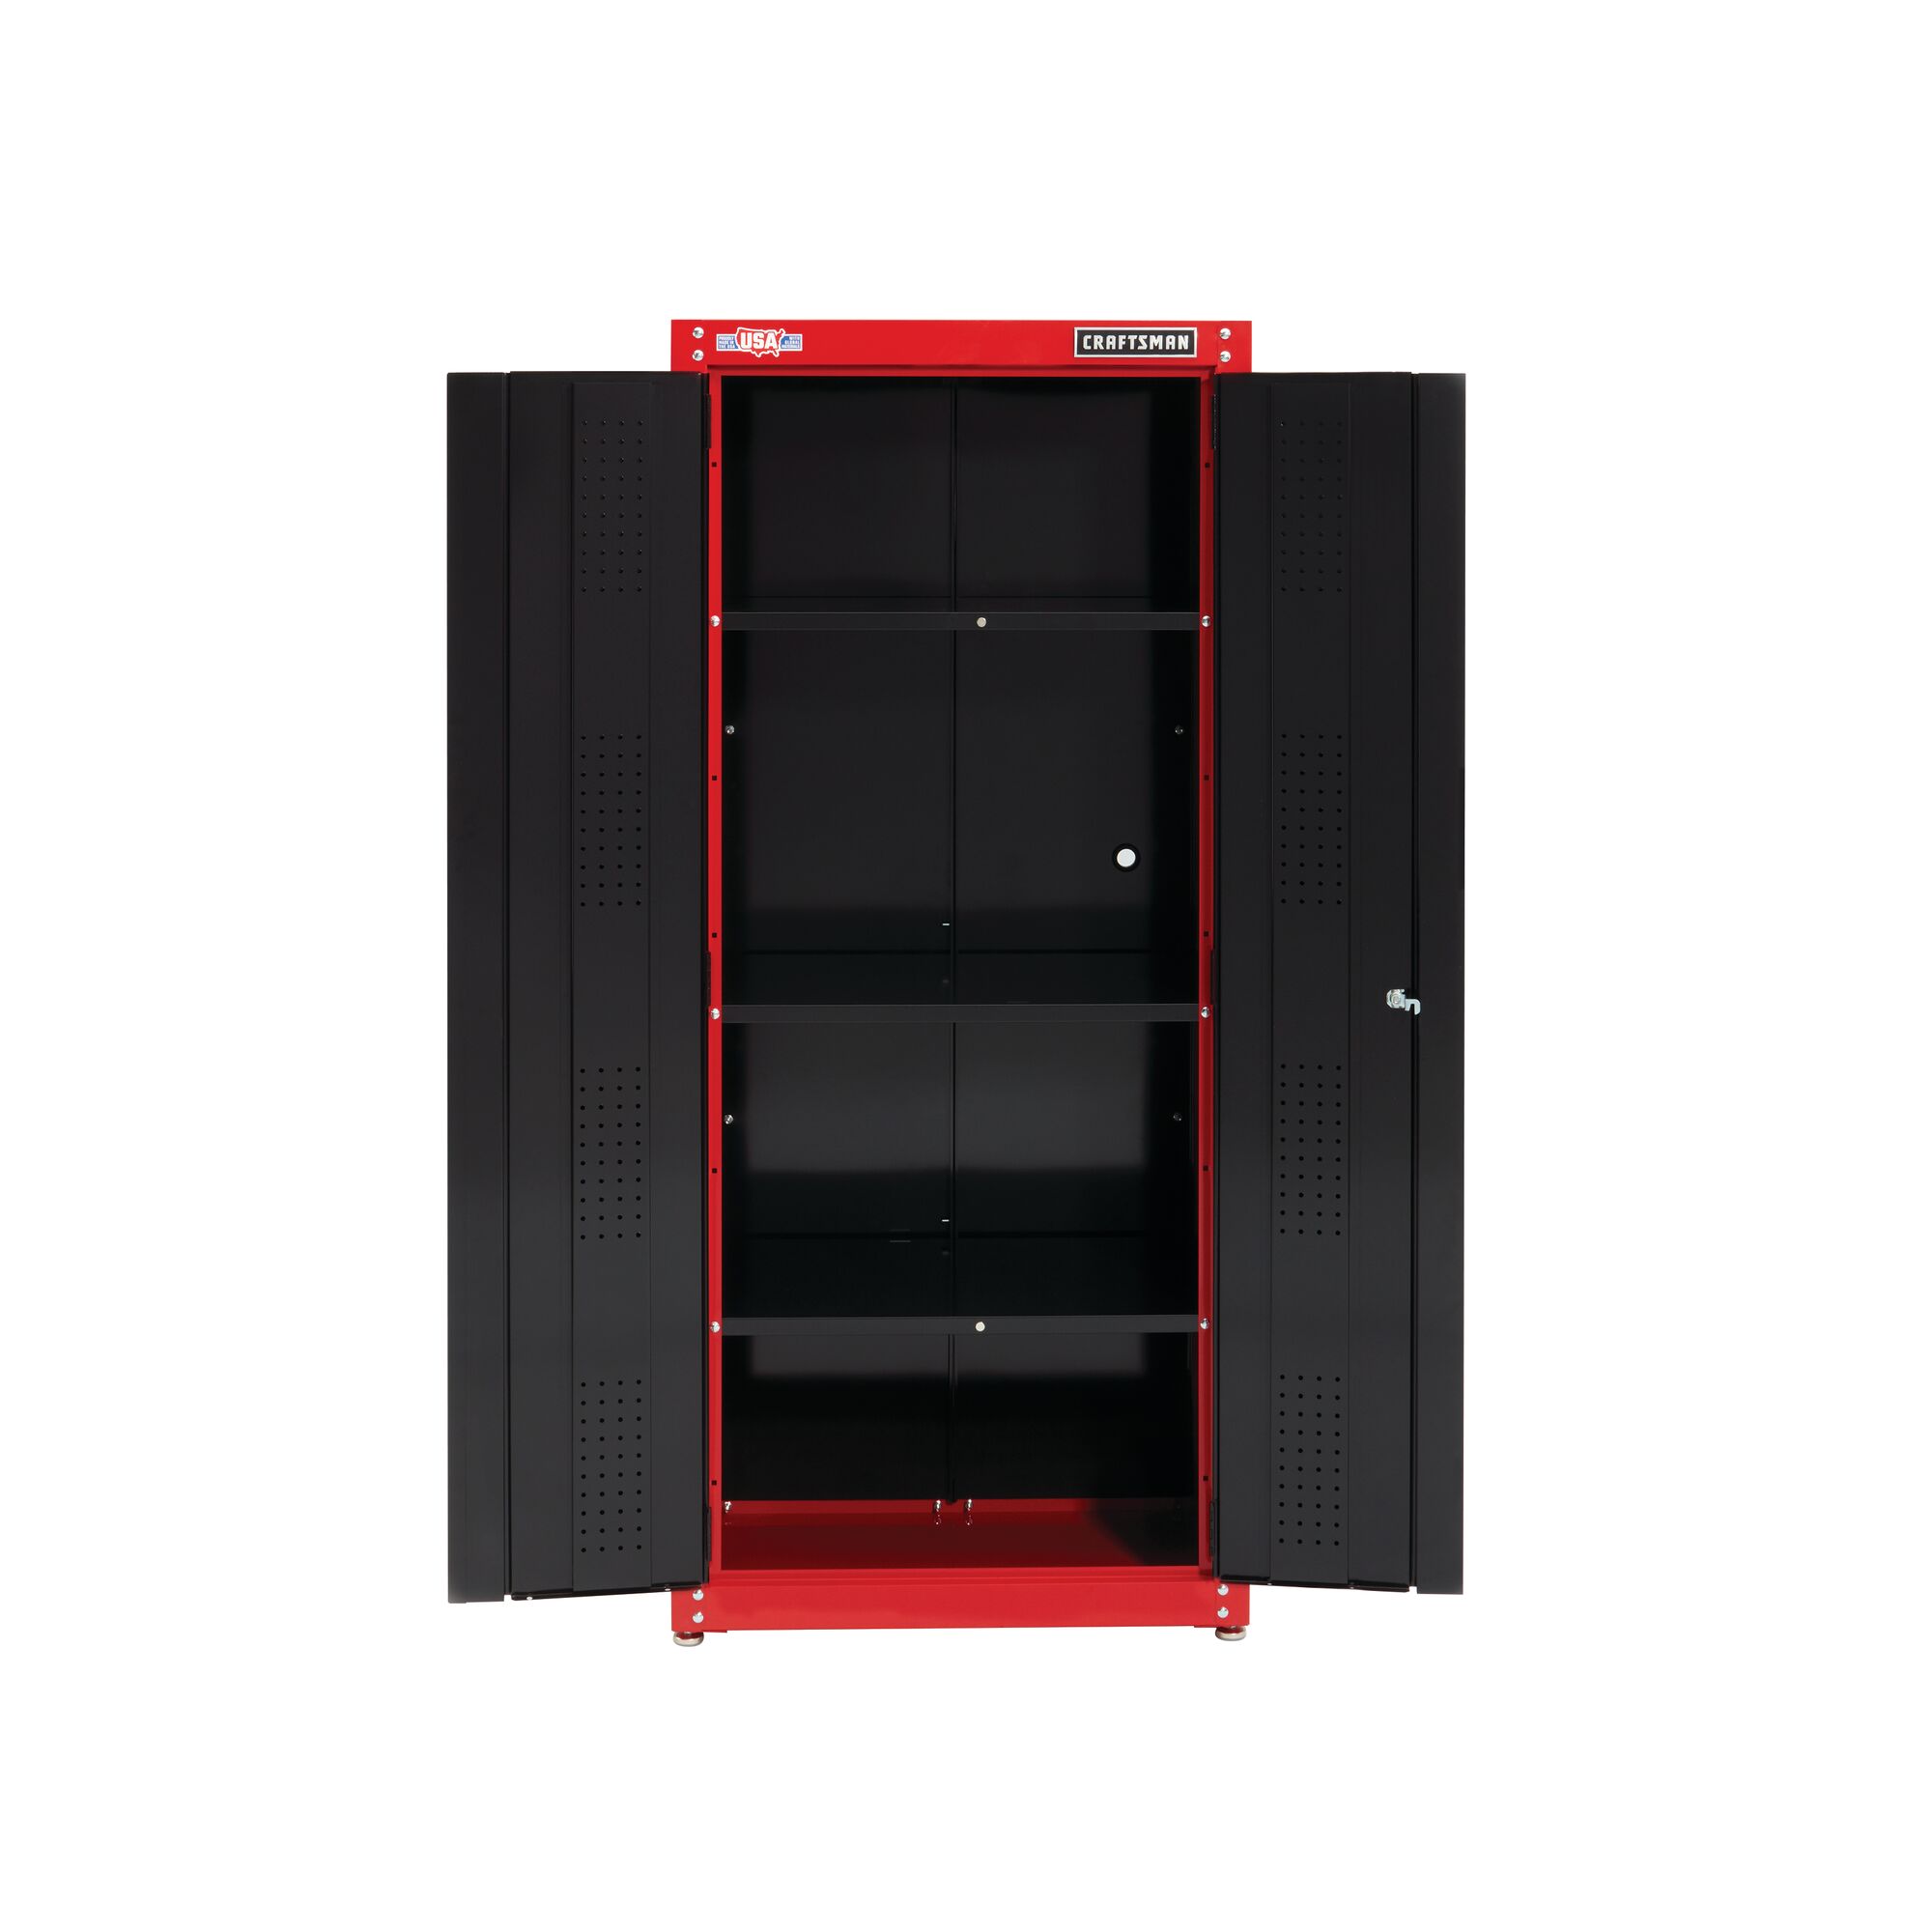 32 inch Wide freestanding tall garage storage cabinet doors opened.